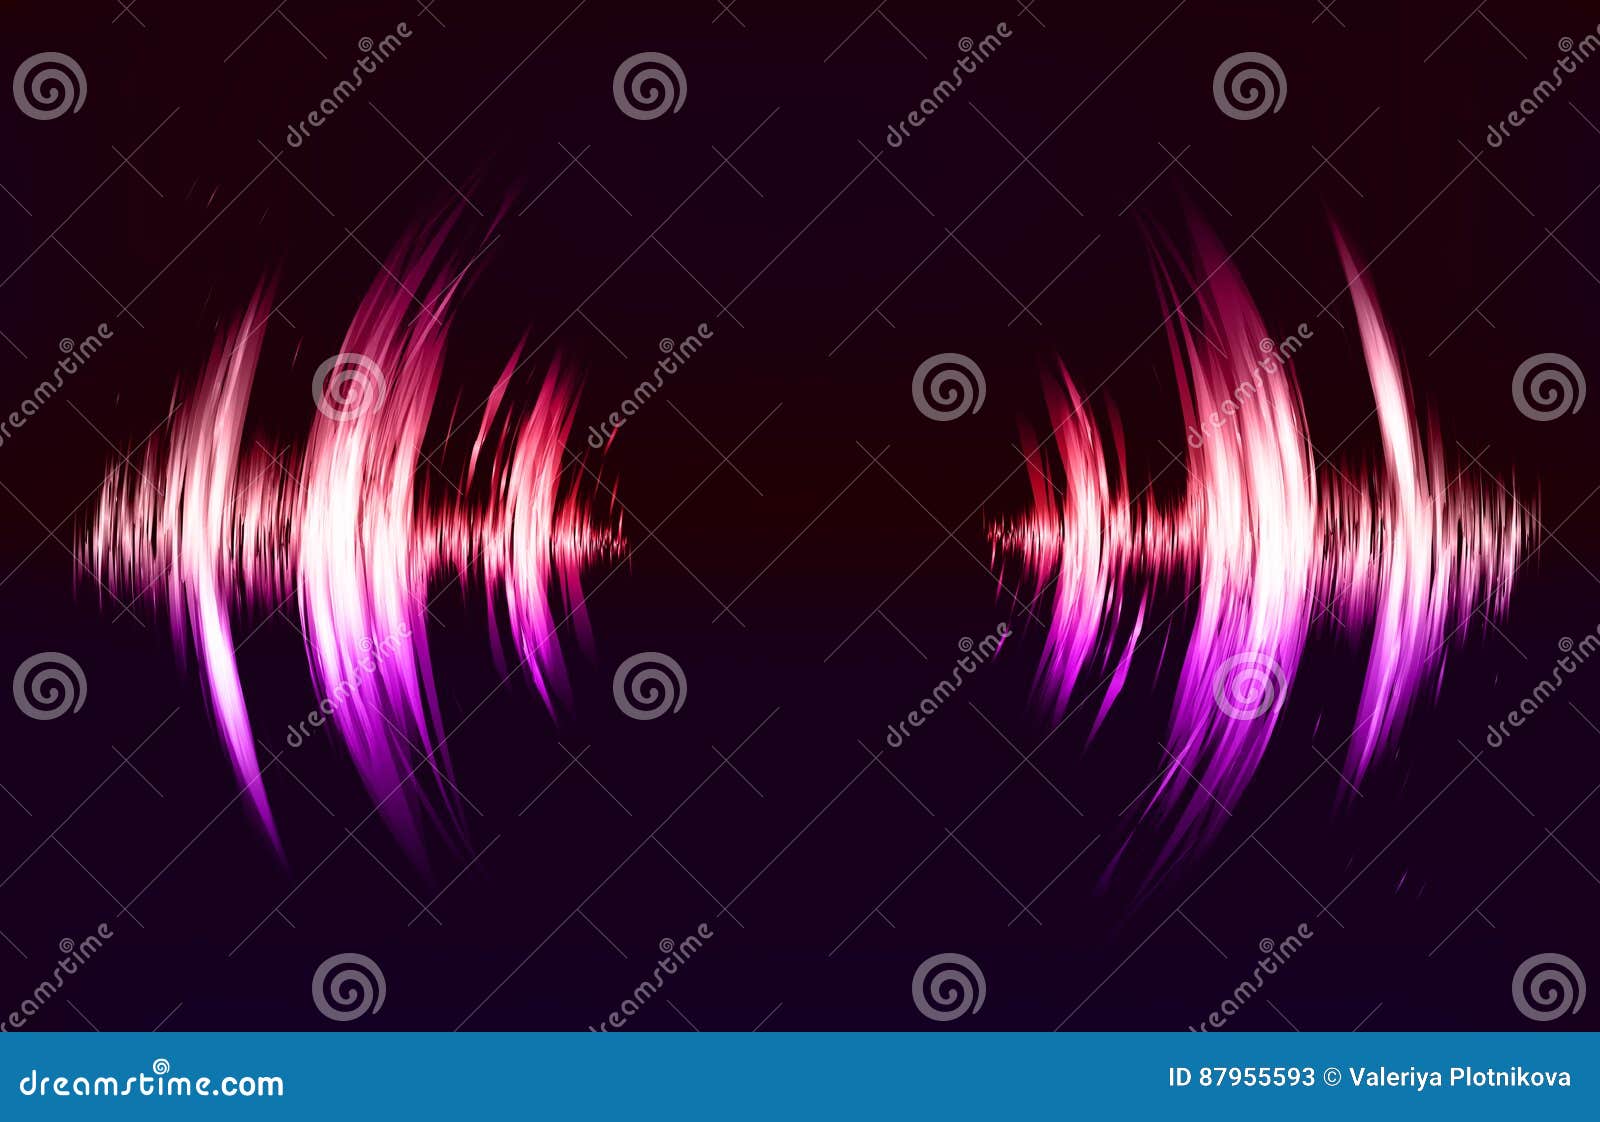  techno background with crcular sound vibration.